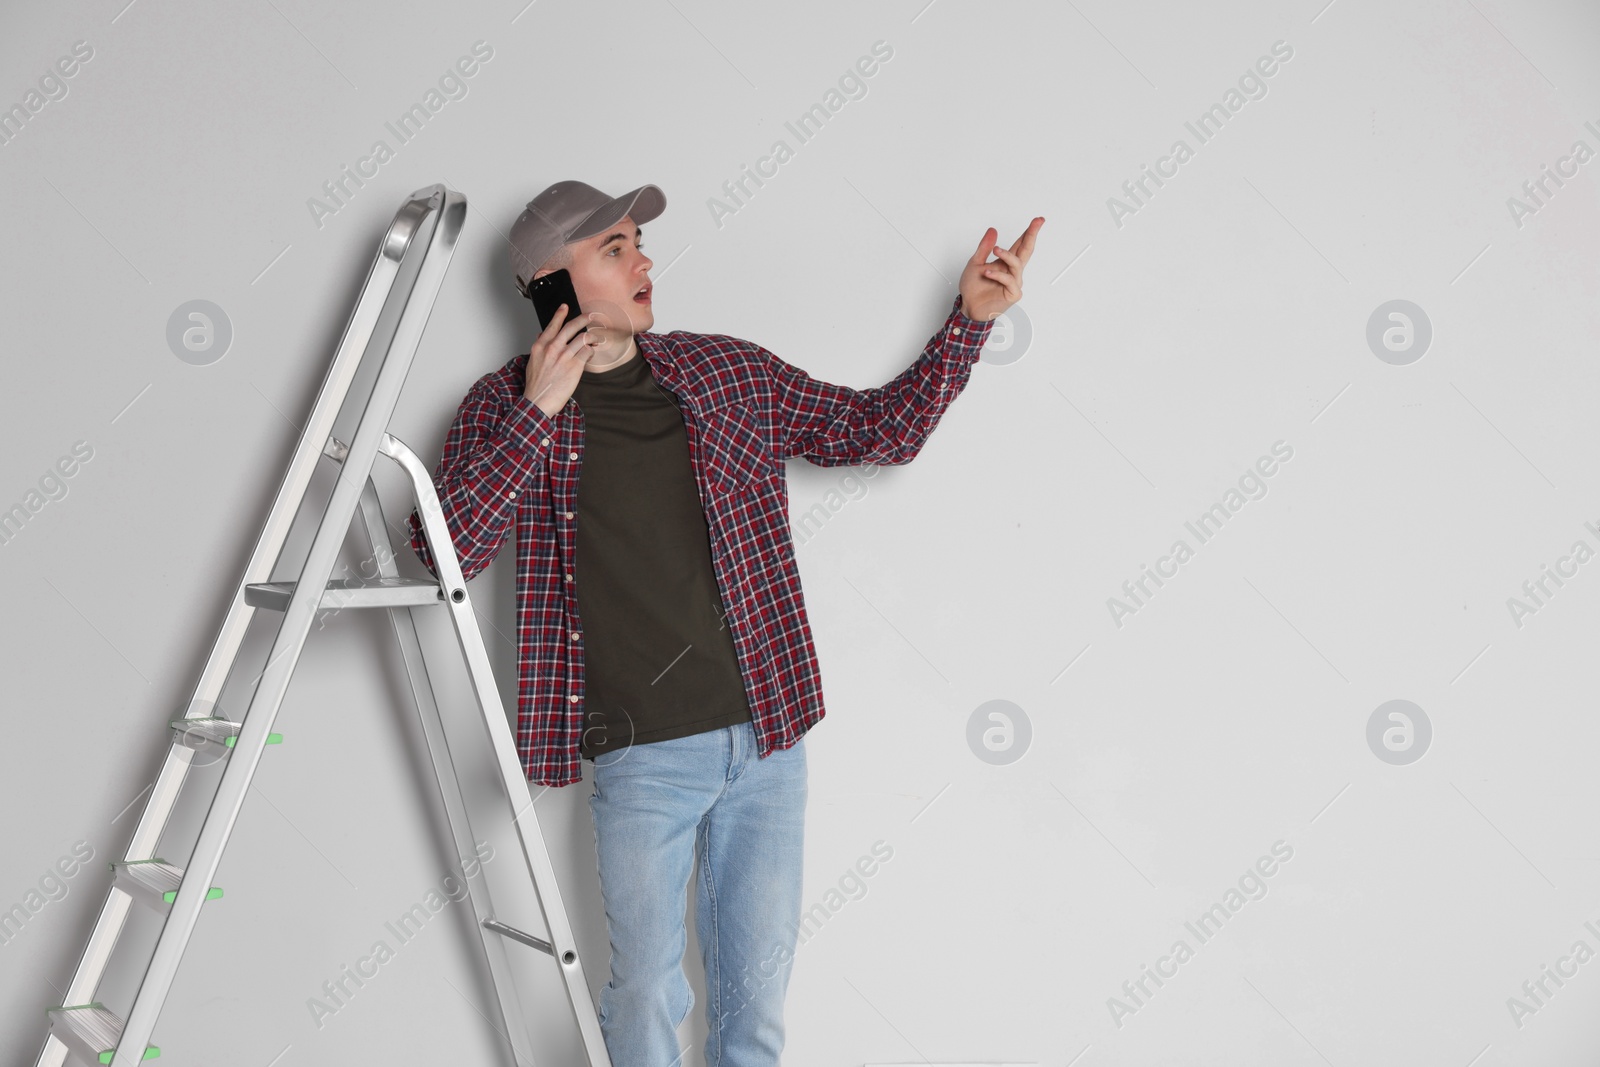 Photo of Emotional handyman talking on phone near stepladder in room